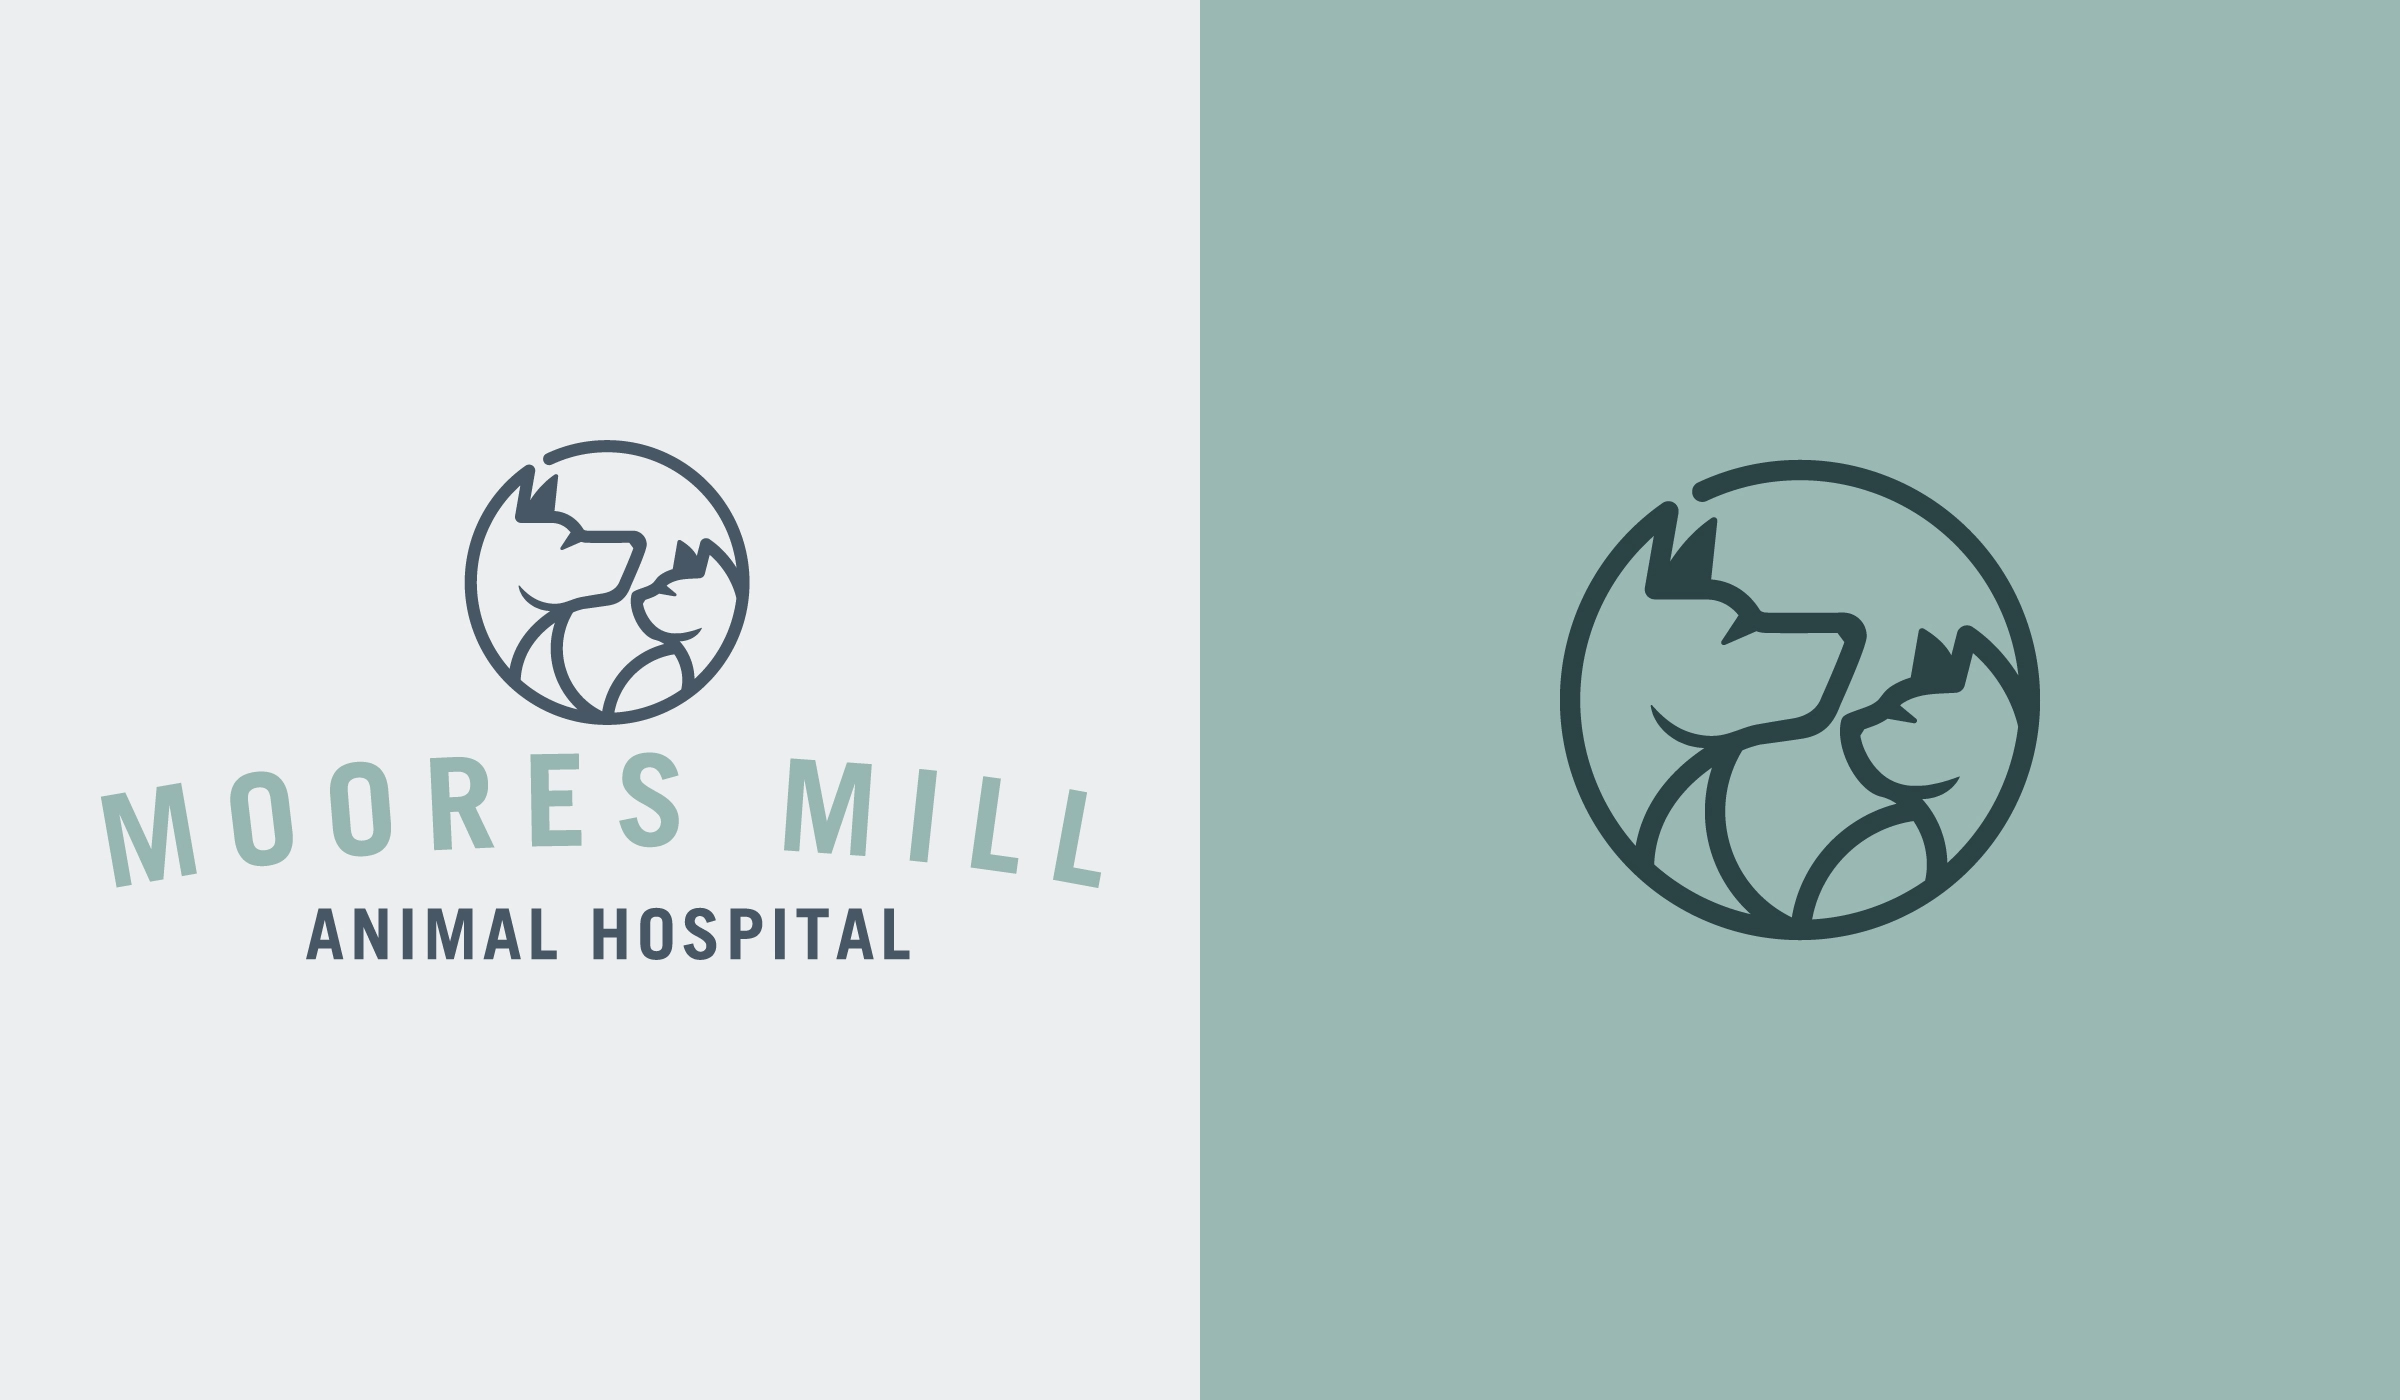 moores mill animal hospital here molly girl marketing firm auburn alabama opelika logo branding social media website development